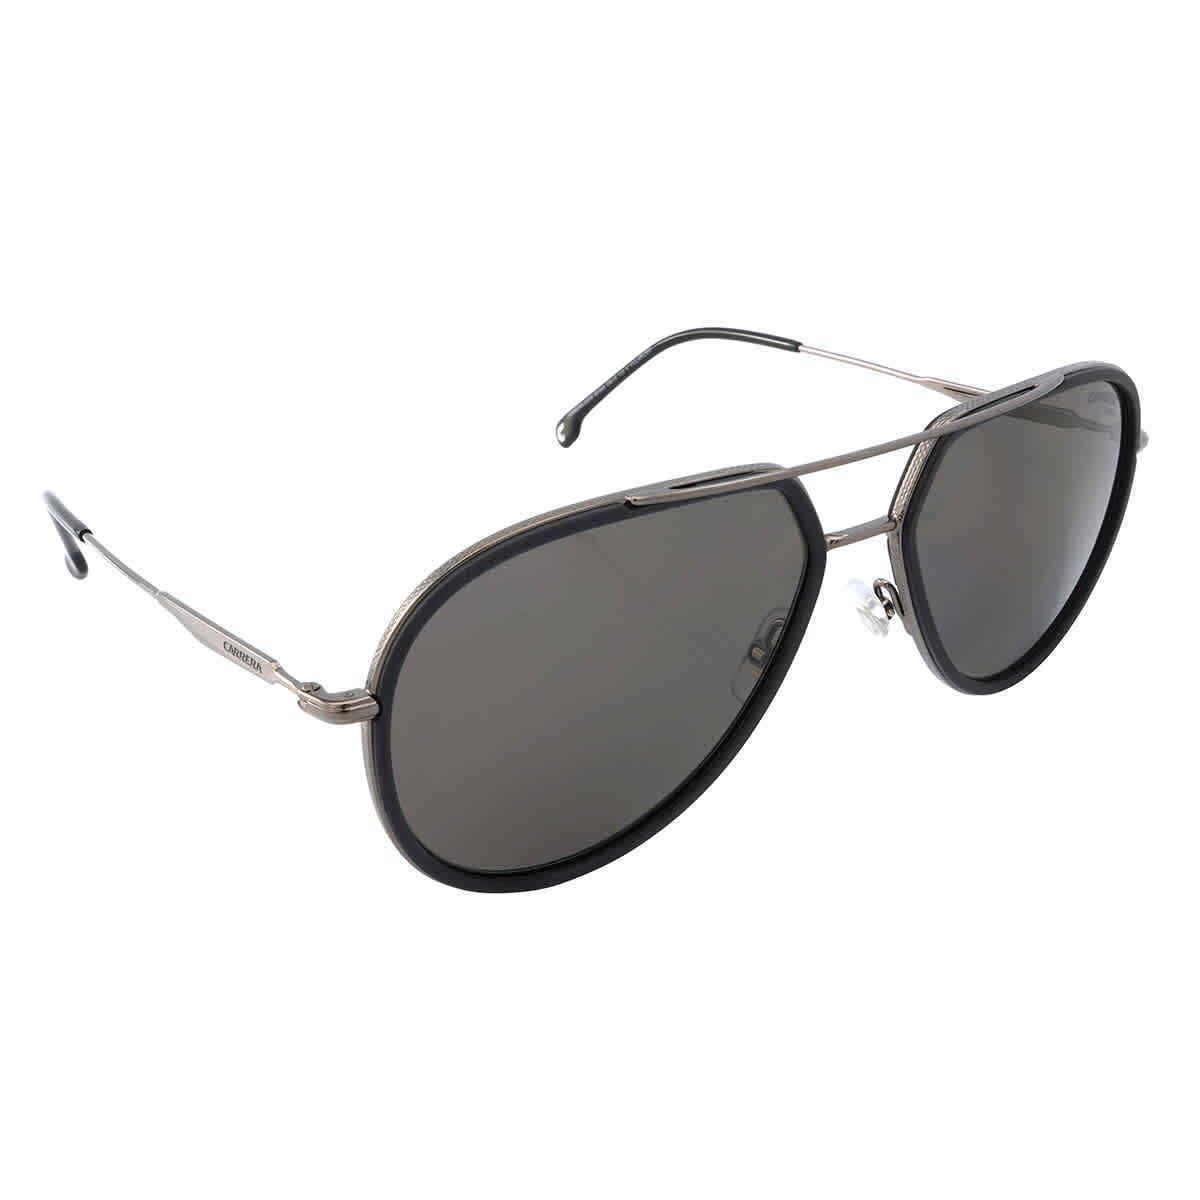 Carrera Polarized Grey Pilot Unisex Sunglasses Carrera 295/S 0003/M9 58